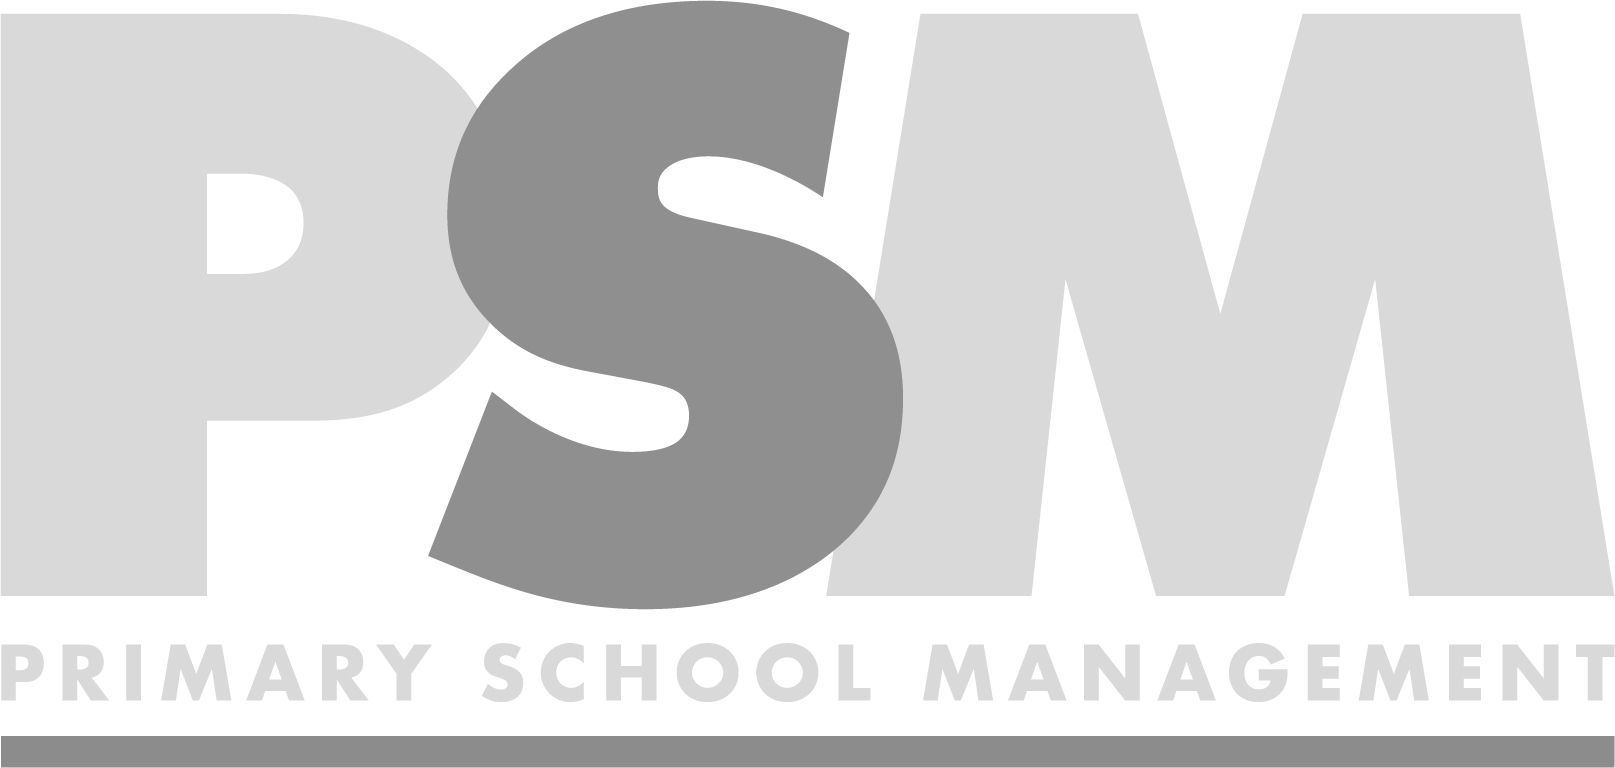 Primary School Management logo